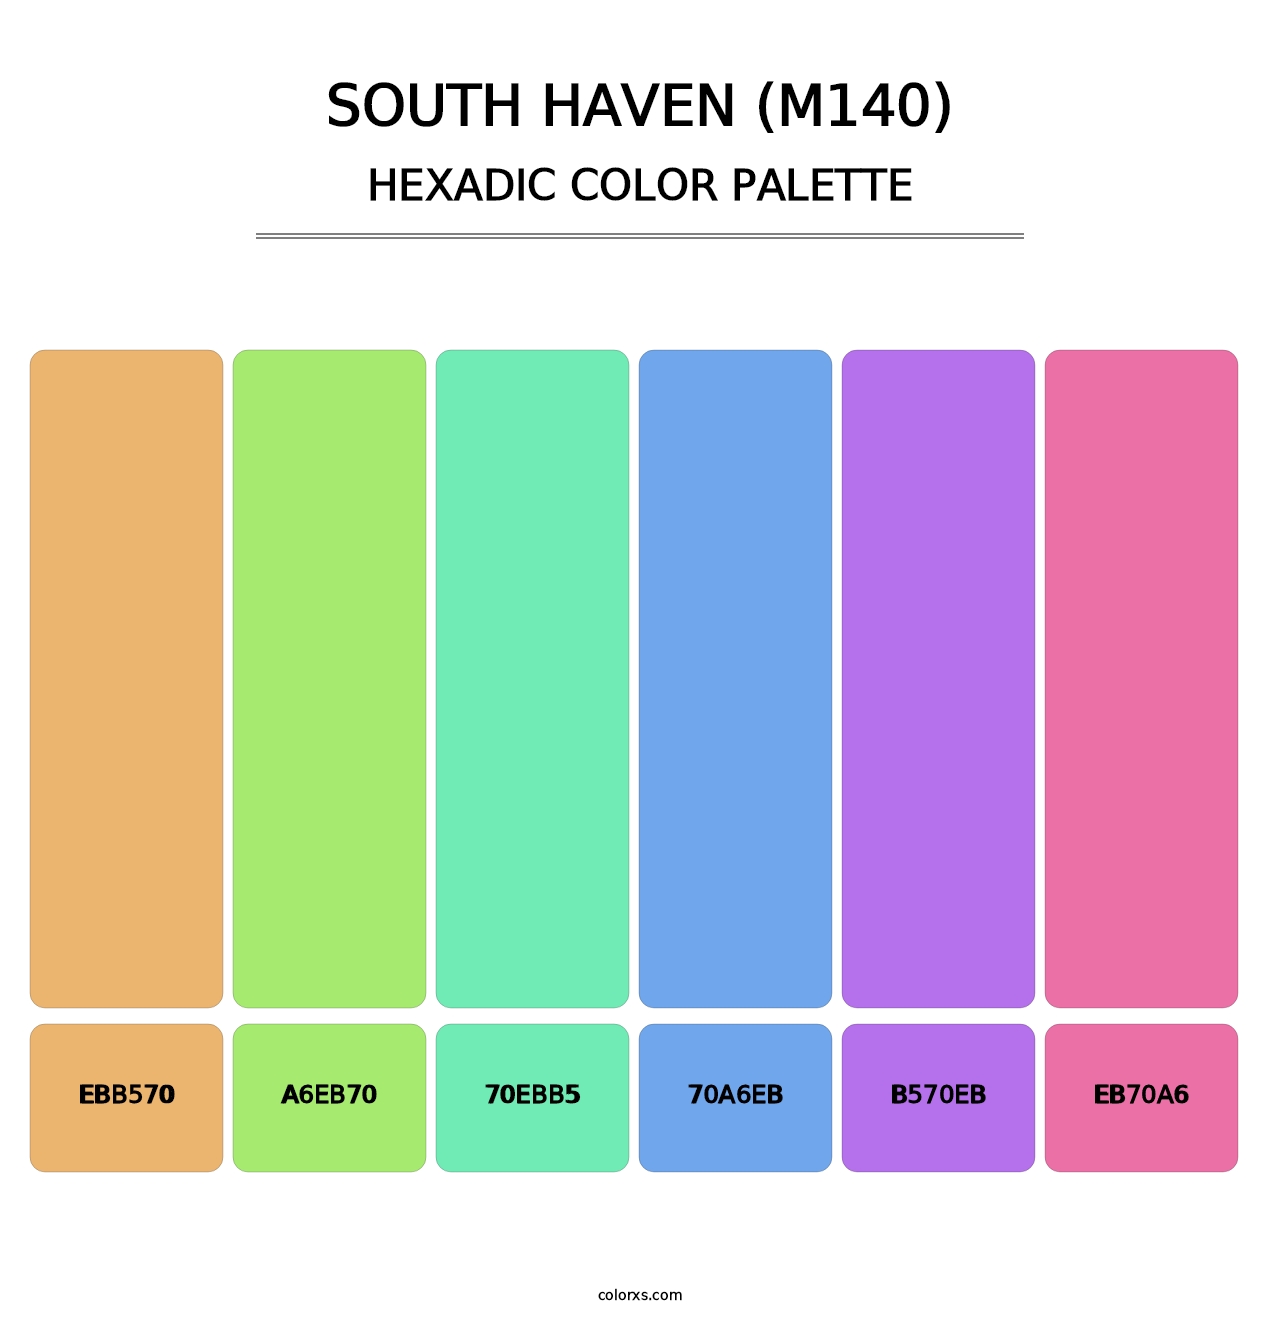 South Haven (M140) - Hexadic Color Palette